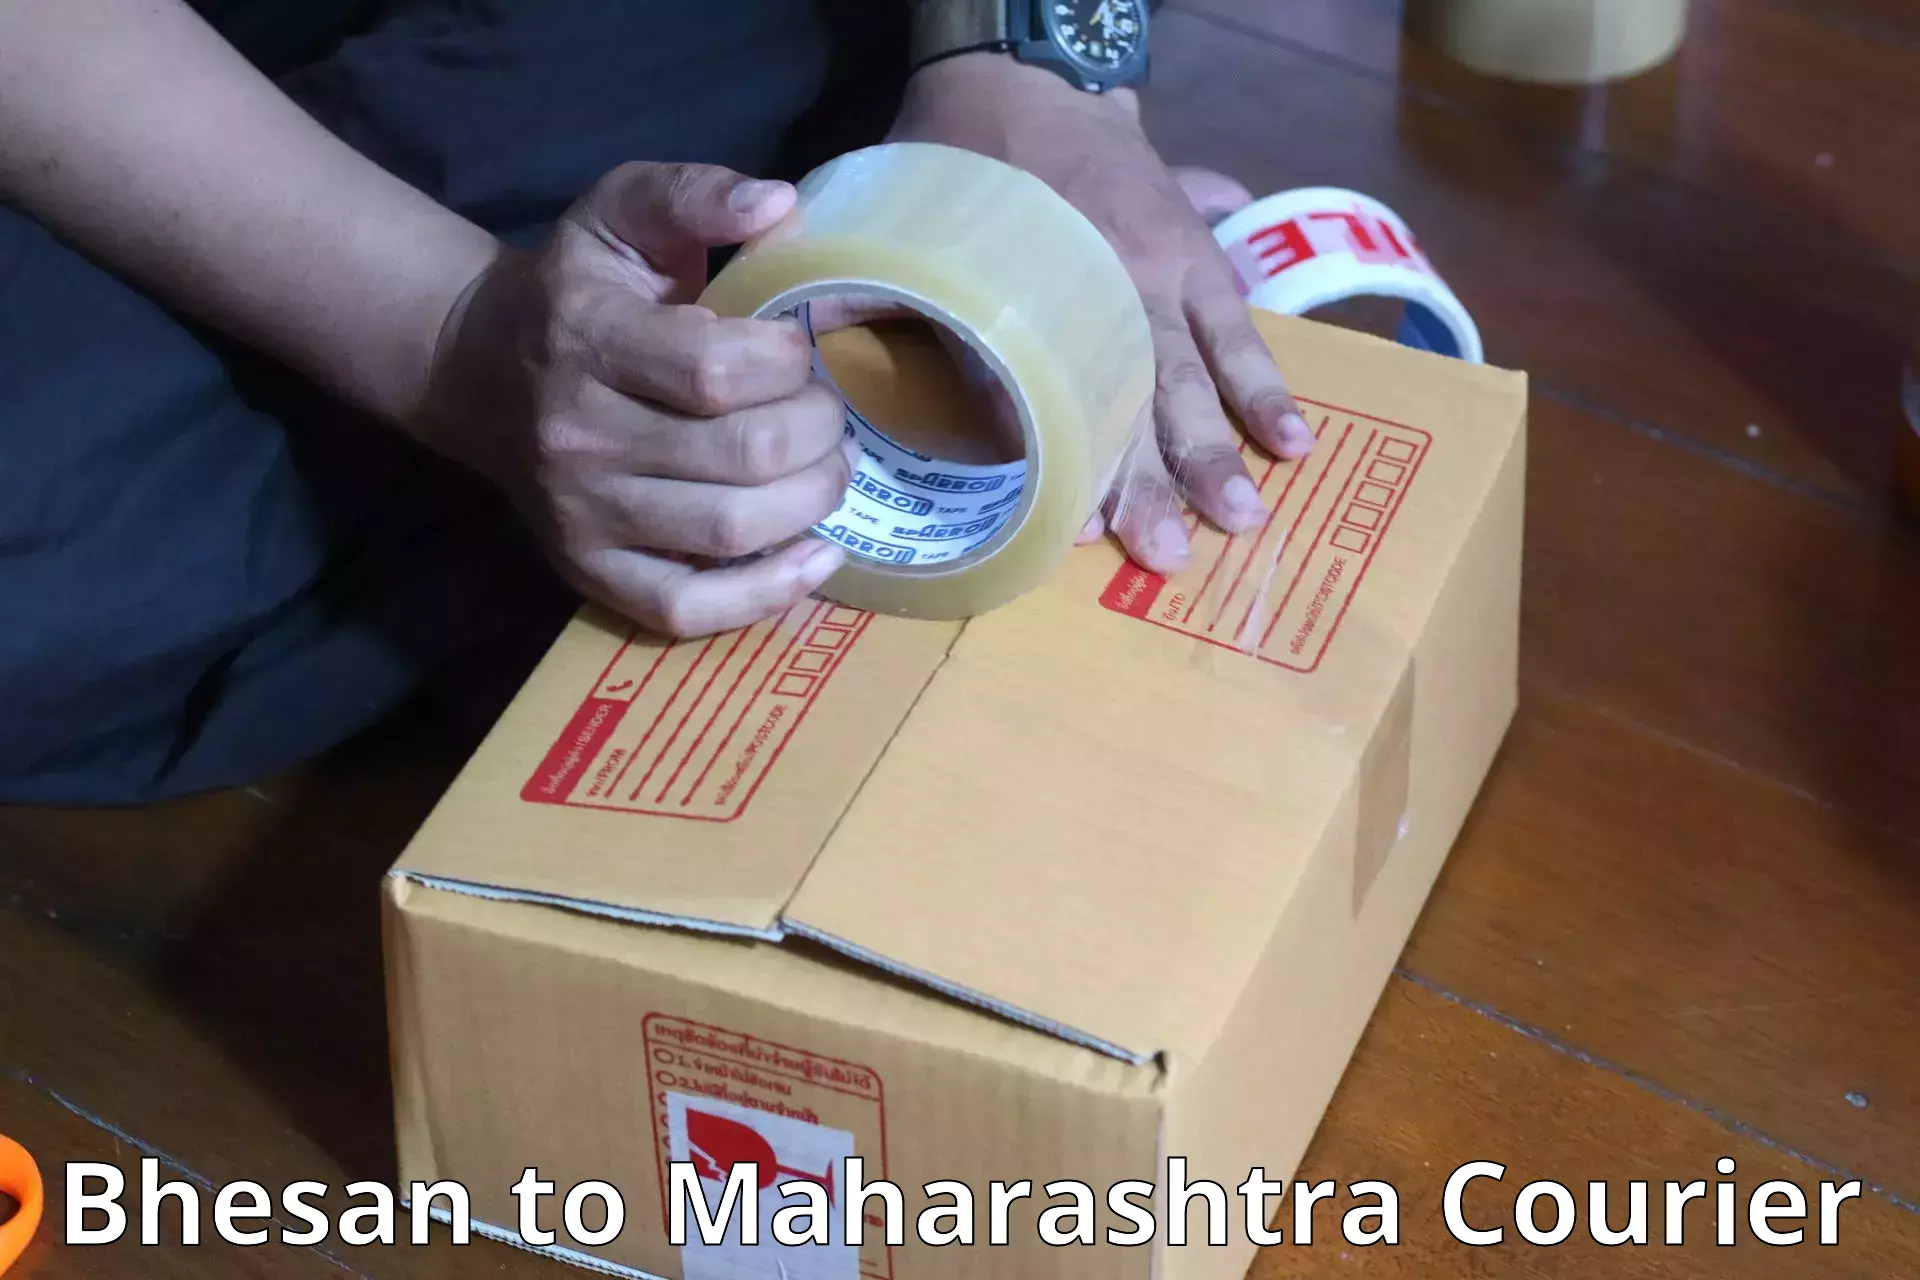 High-quality baggage shipment Bhesan to Mahabaleshwar